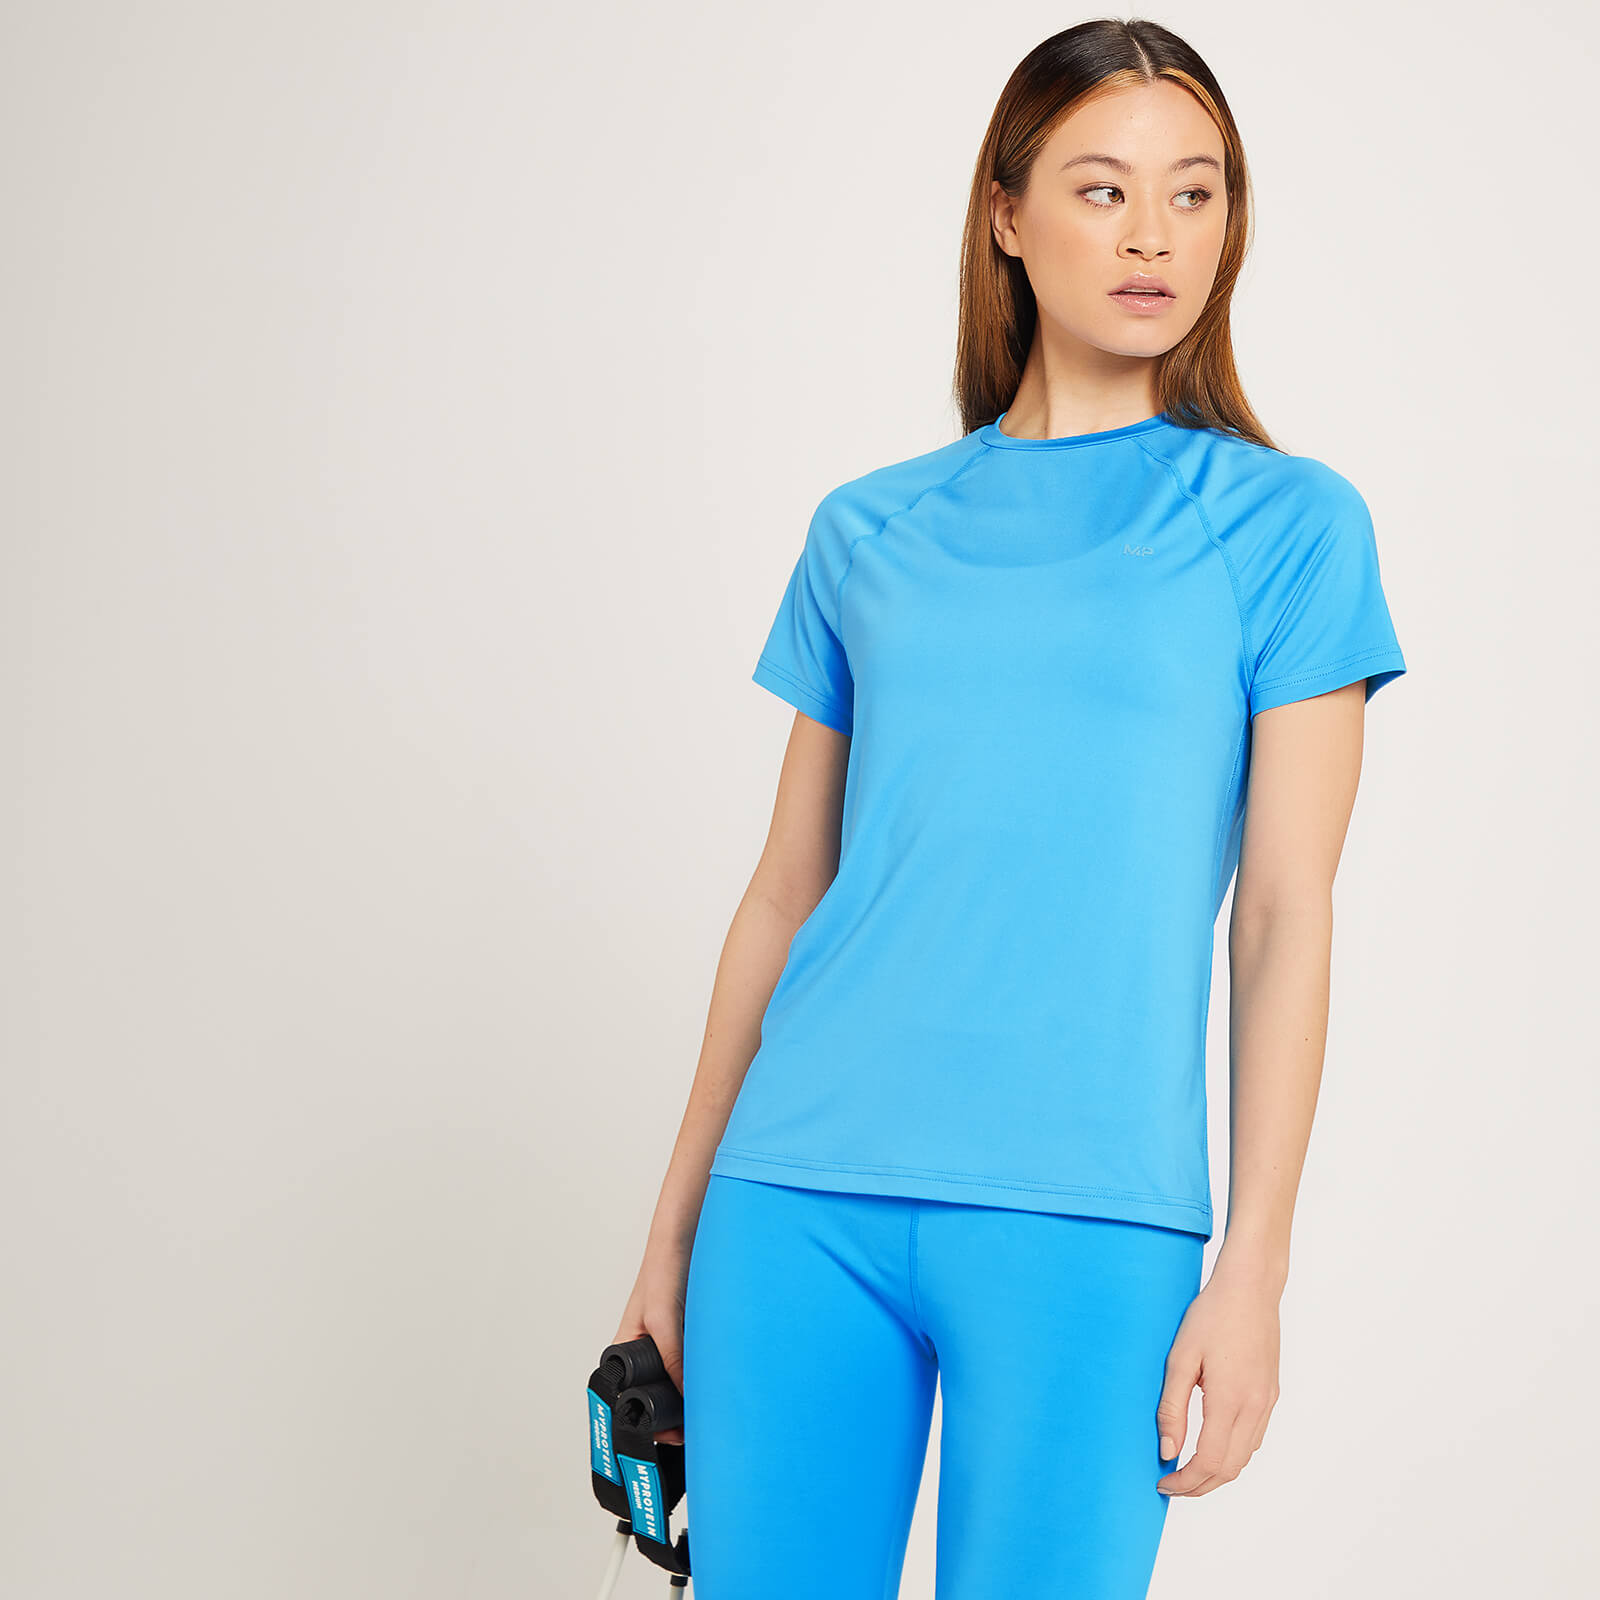 MP Women's Linear Mark Training T-Shirt - Bright Blue - XS